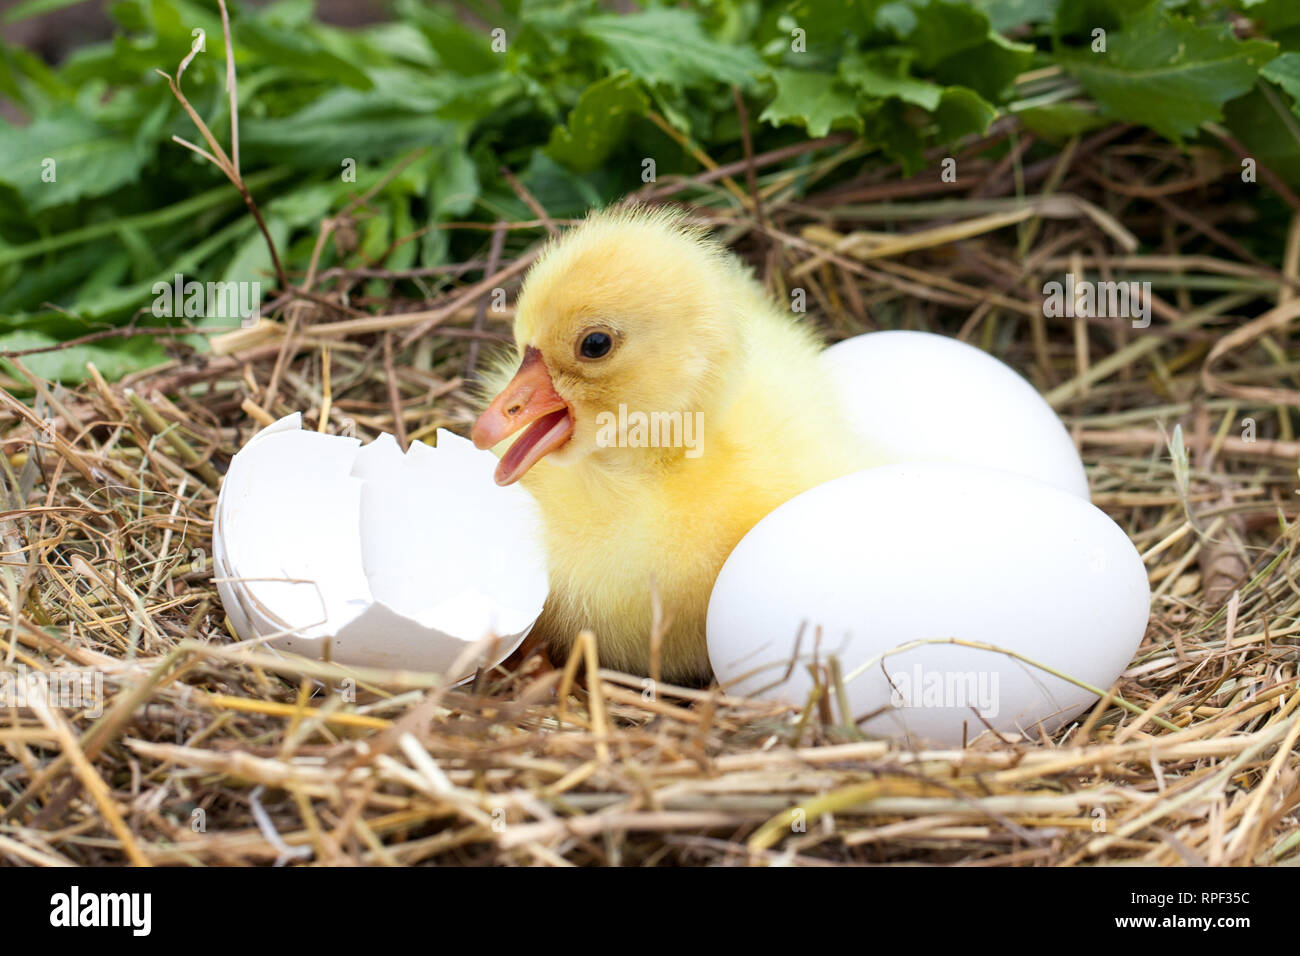 Duck Incubator Her Eggs On The Straw Nest Stock Photo - Download Image Now  - Animal Egg, Animal Nest, Duck - Bird - iStock